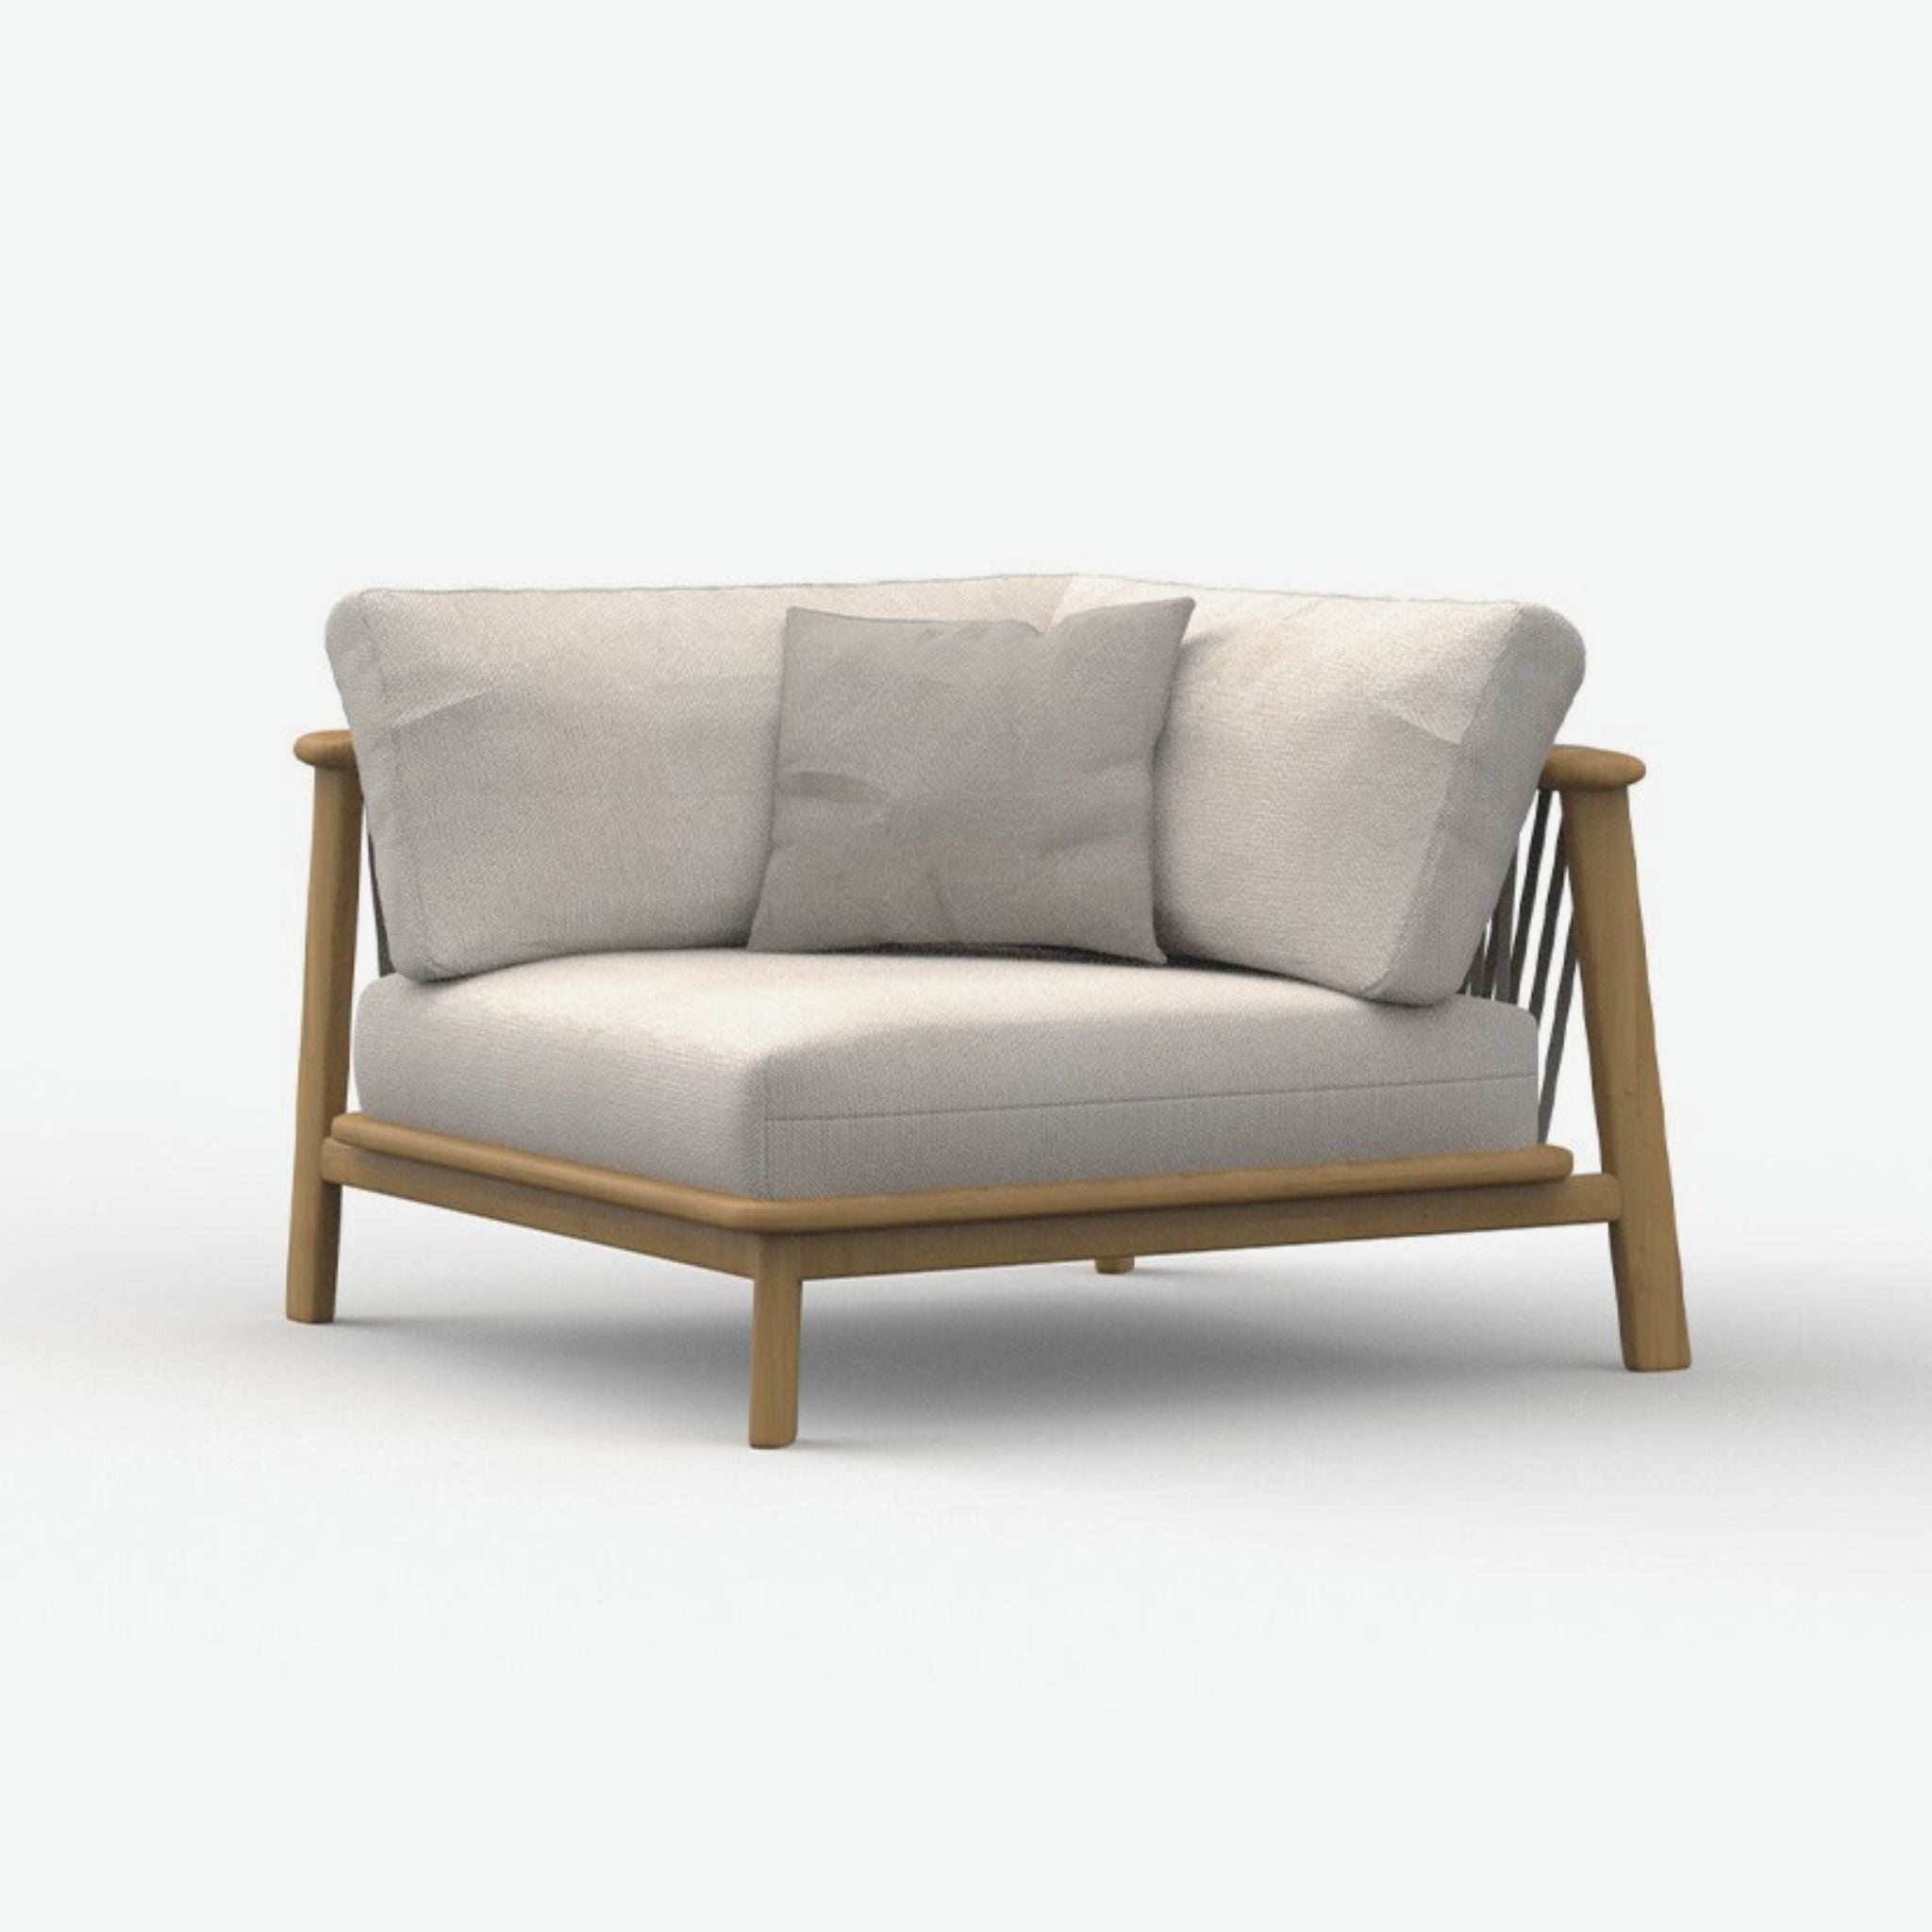 Crisal Decoracion Erice-1 Modular Sofa Corner Rope and Teak Wood - ModernistaLiving